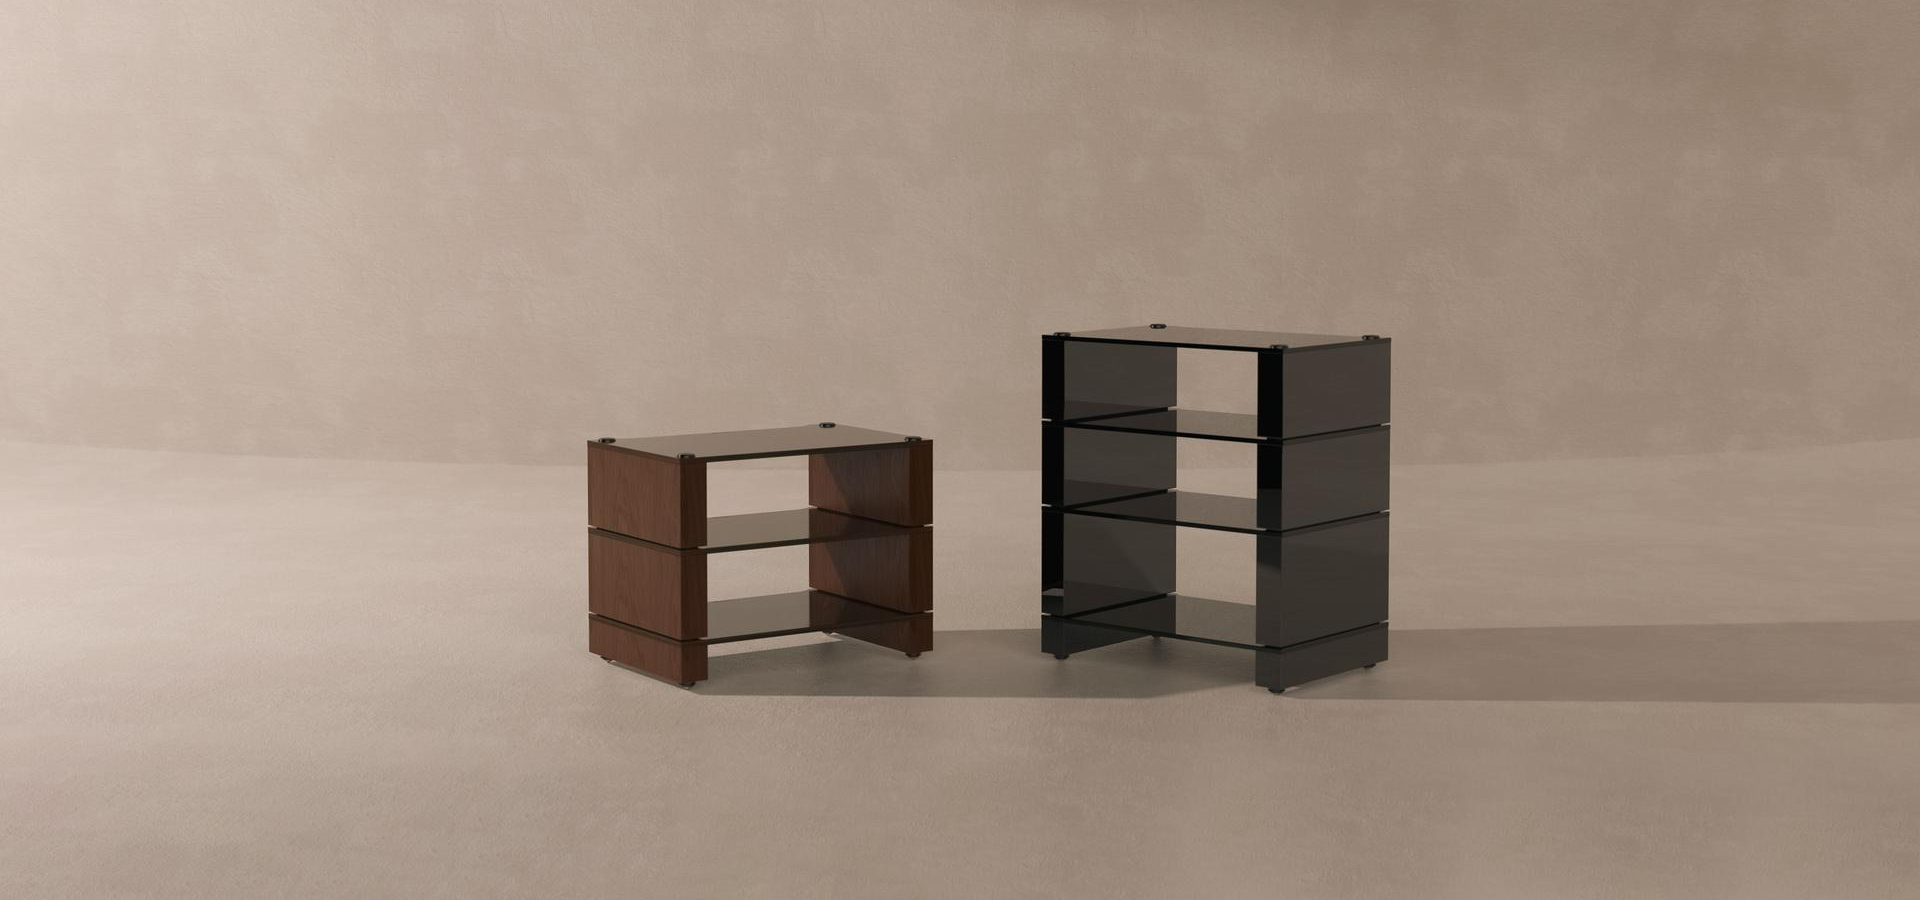 New: HiFi furniture from BLOK